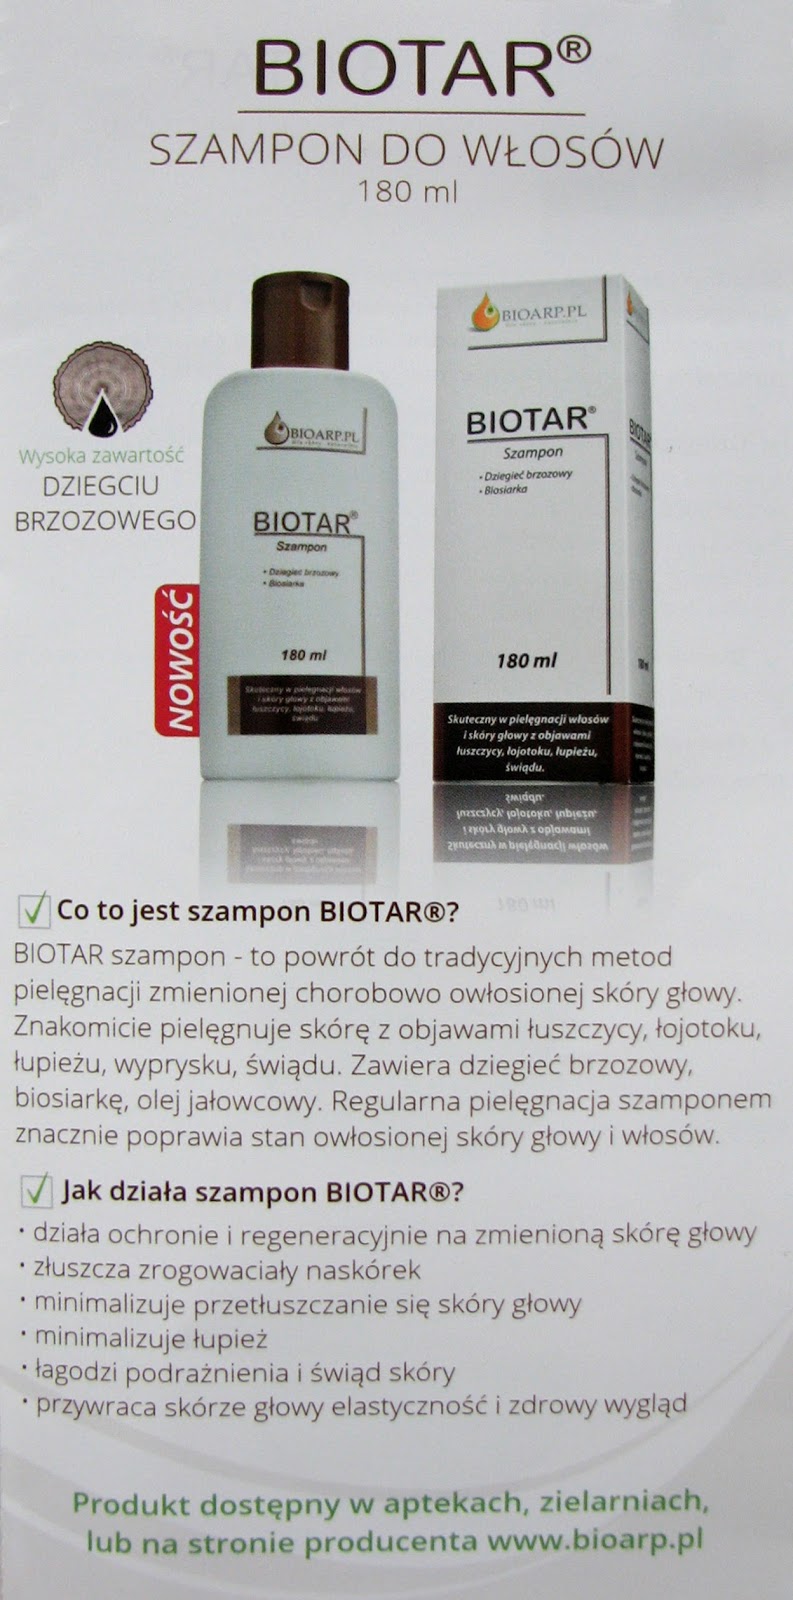 biotar szampon cena